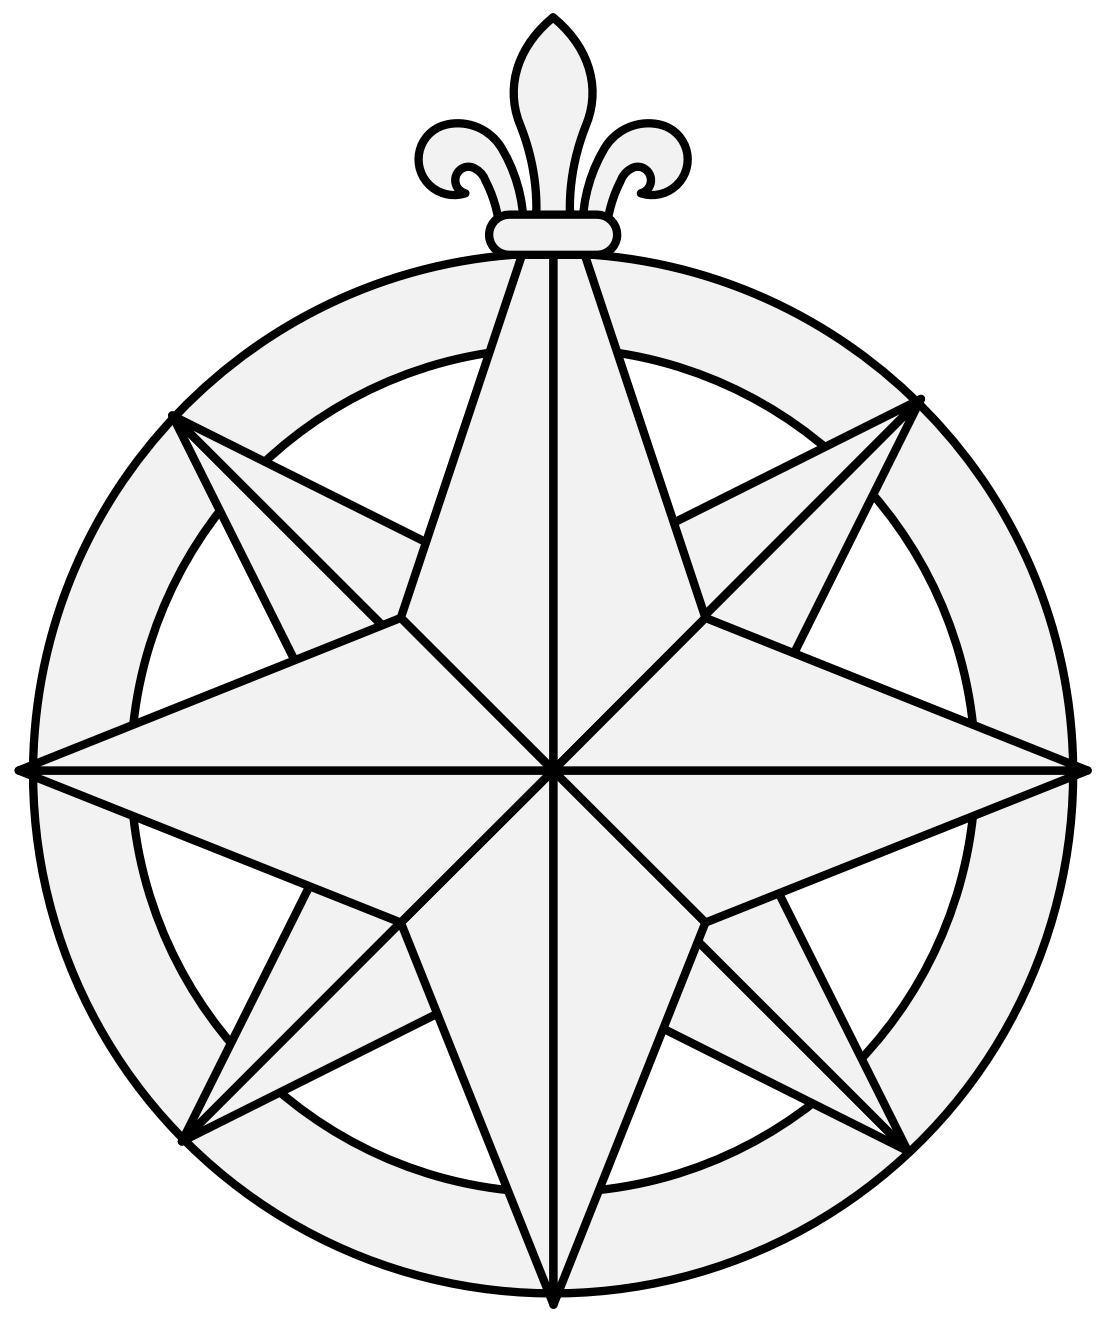 http://heraldicart.org/compass-rose/compass-rose-1.png